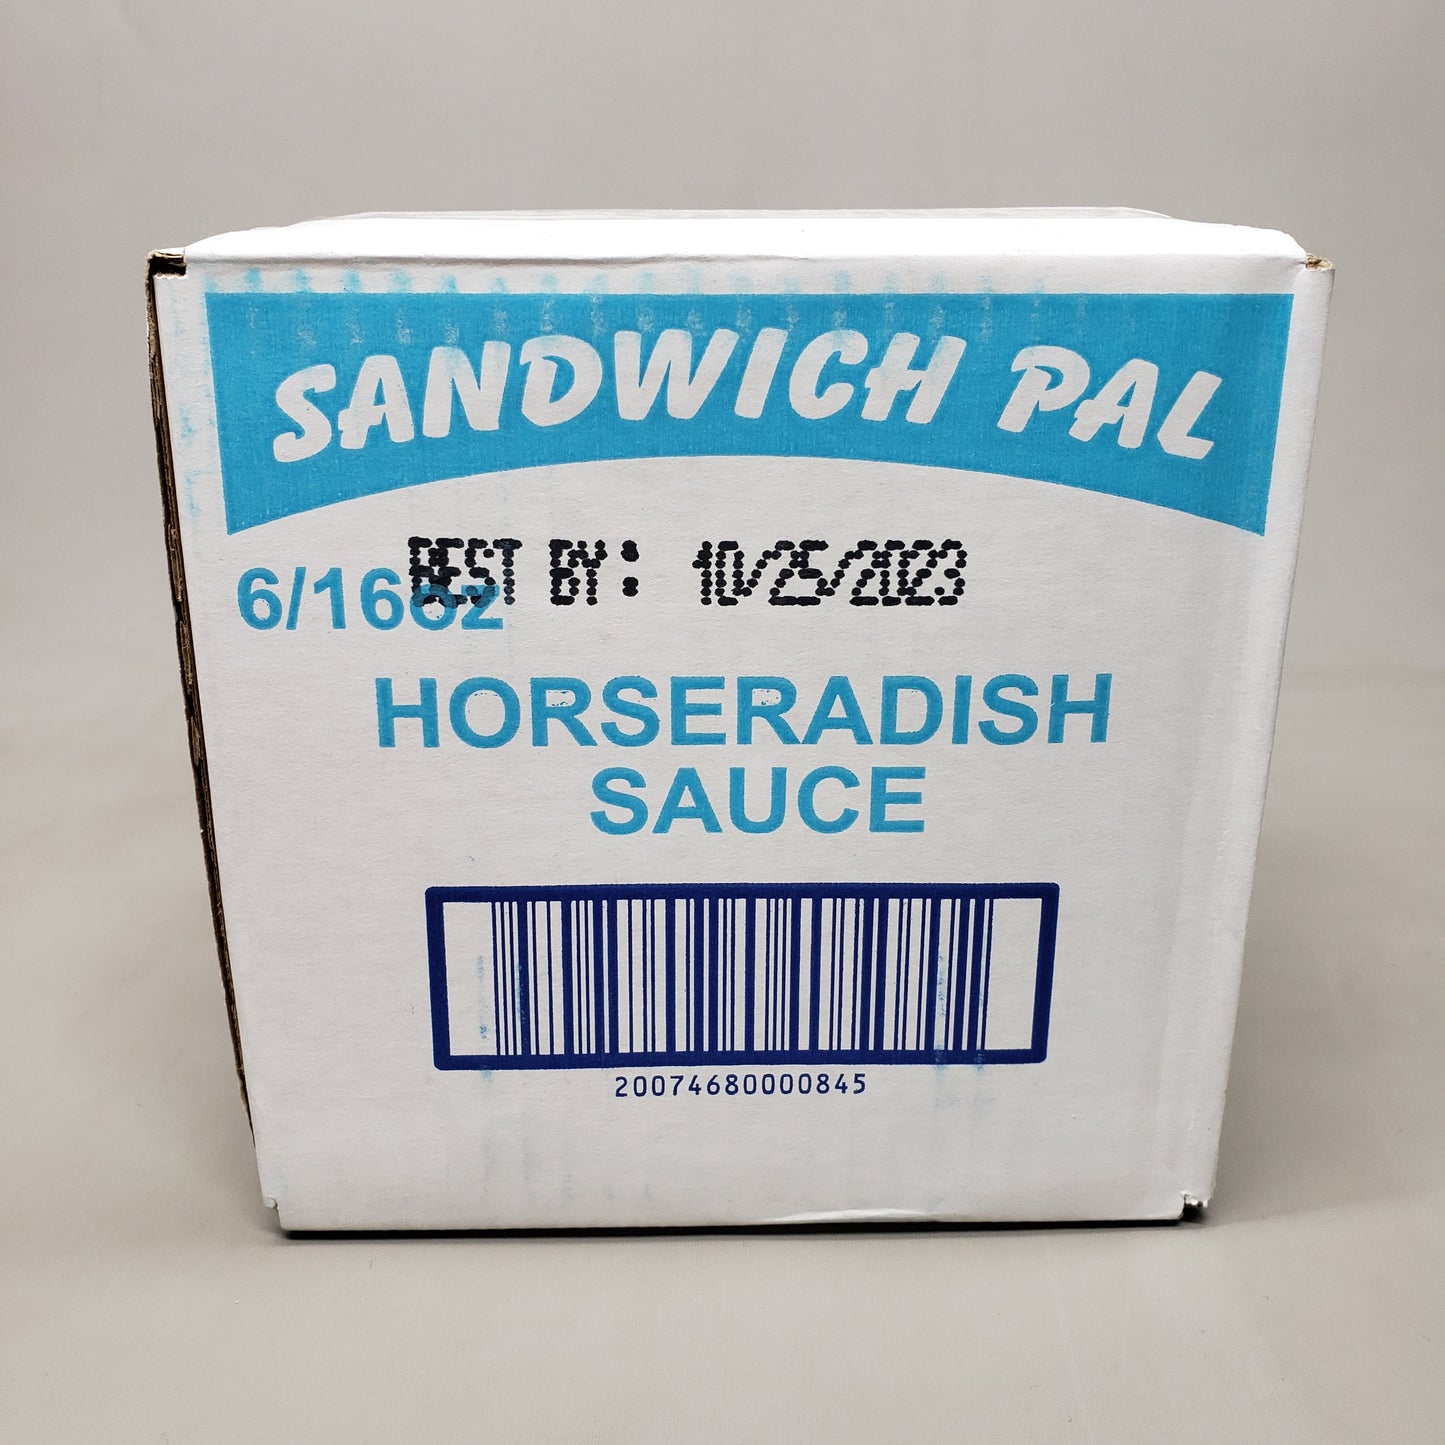 ZA@ WOEBER'S (24 PACK) Sandwich Pal Horseradish Sauce 6/16 oz 10/23 C